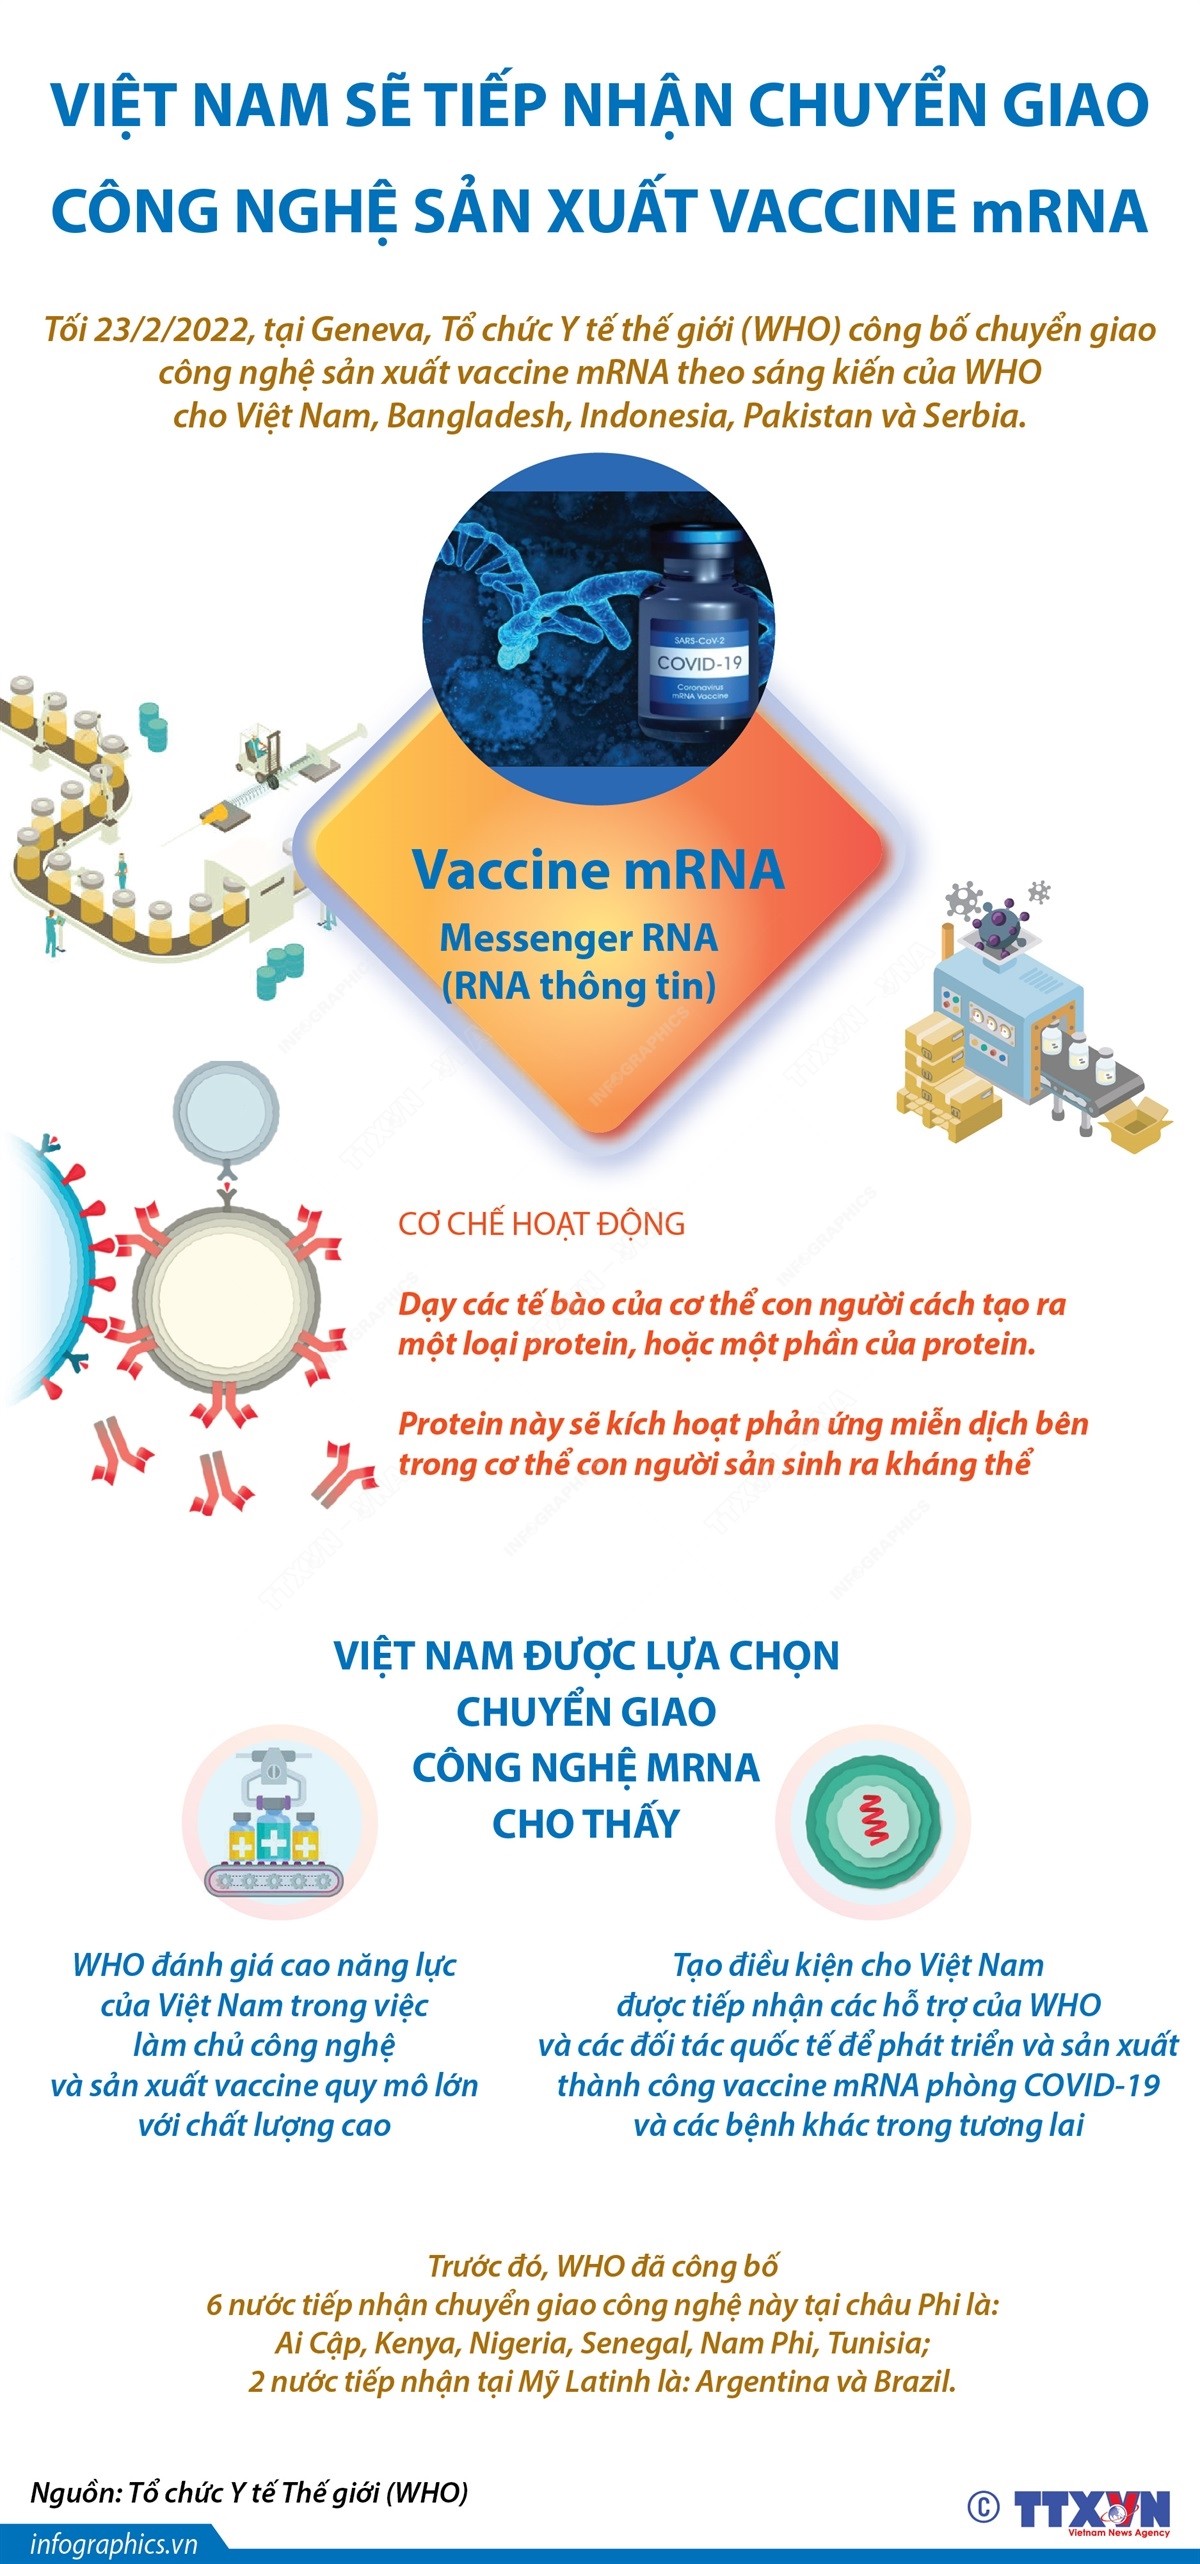 viet-nam-se-tiep-nhan-chuyen-giao-cong-nghe-san-xuat-vaccine-mrna-1645776865.jpg